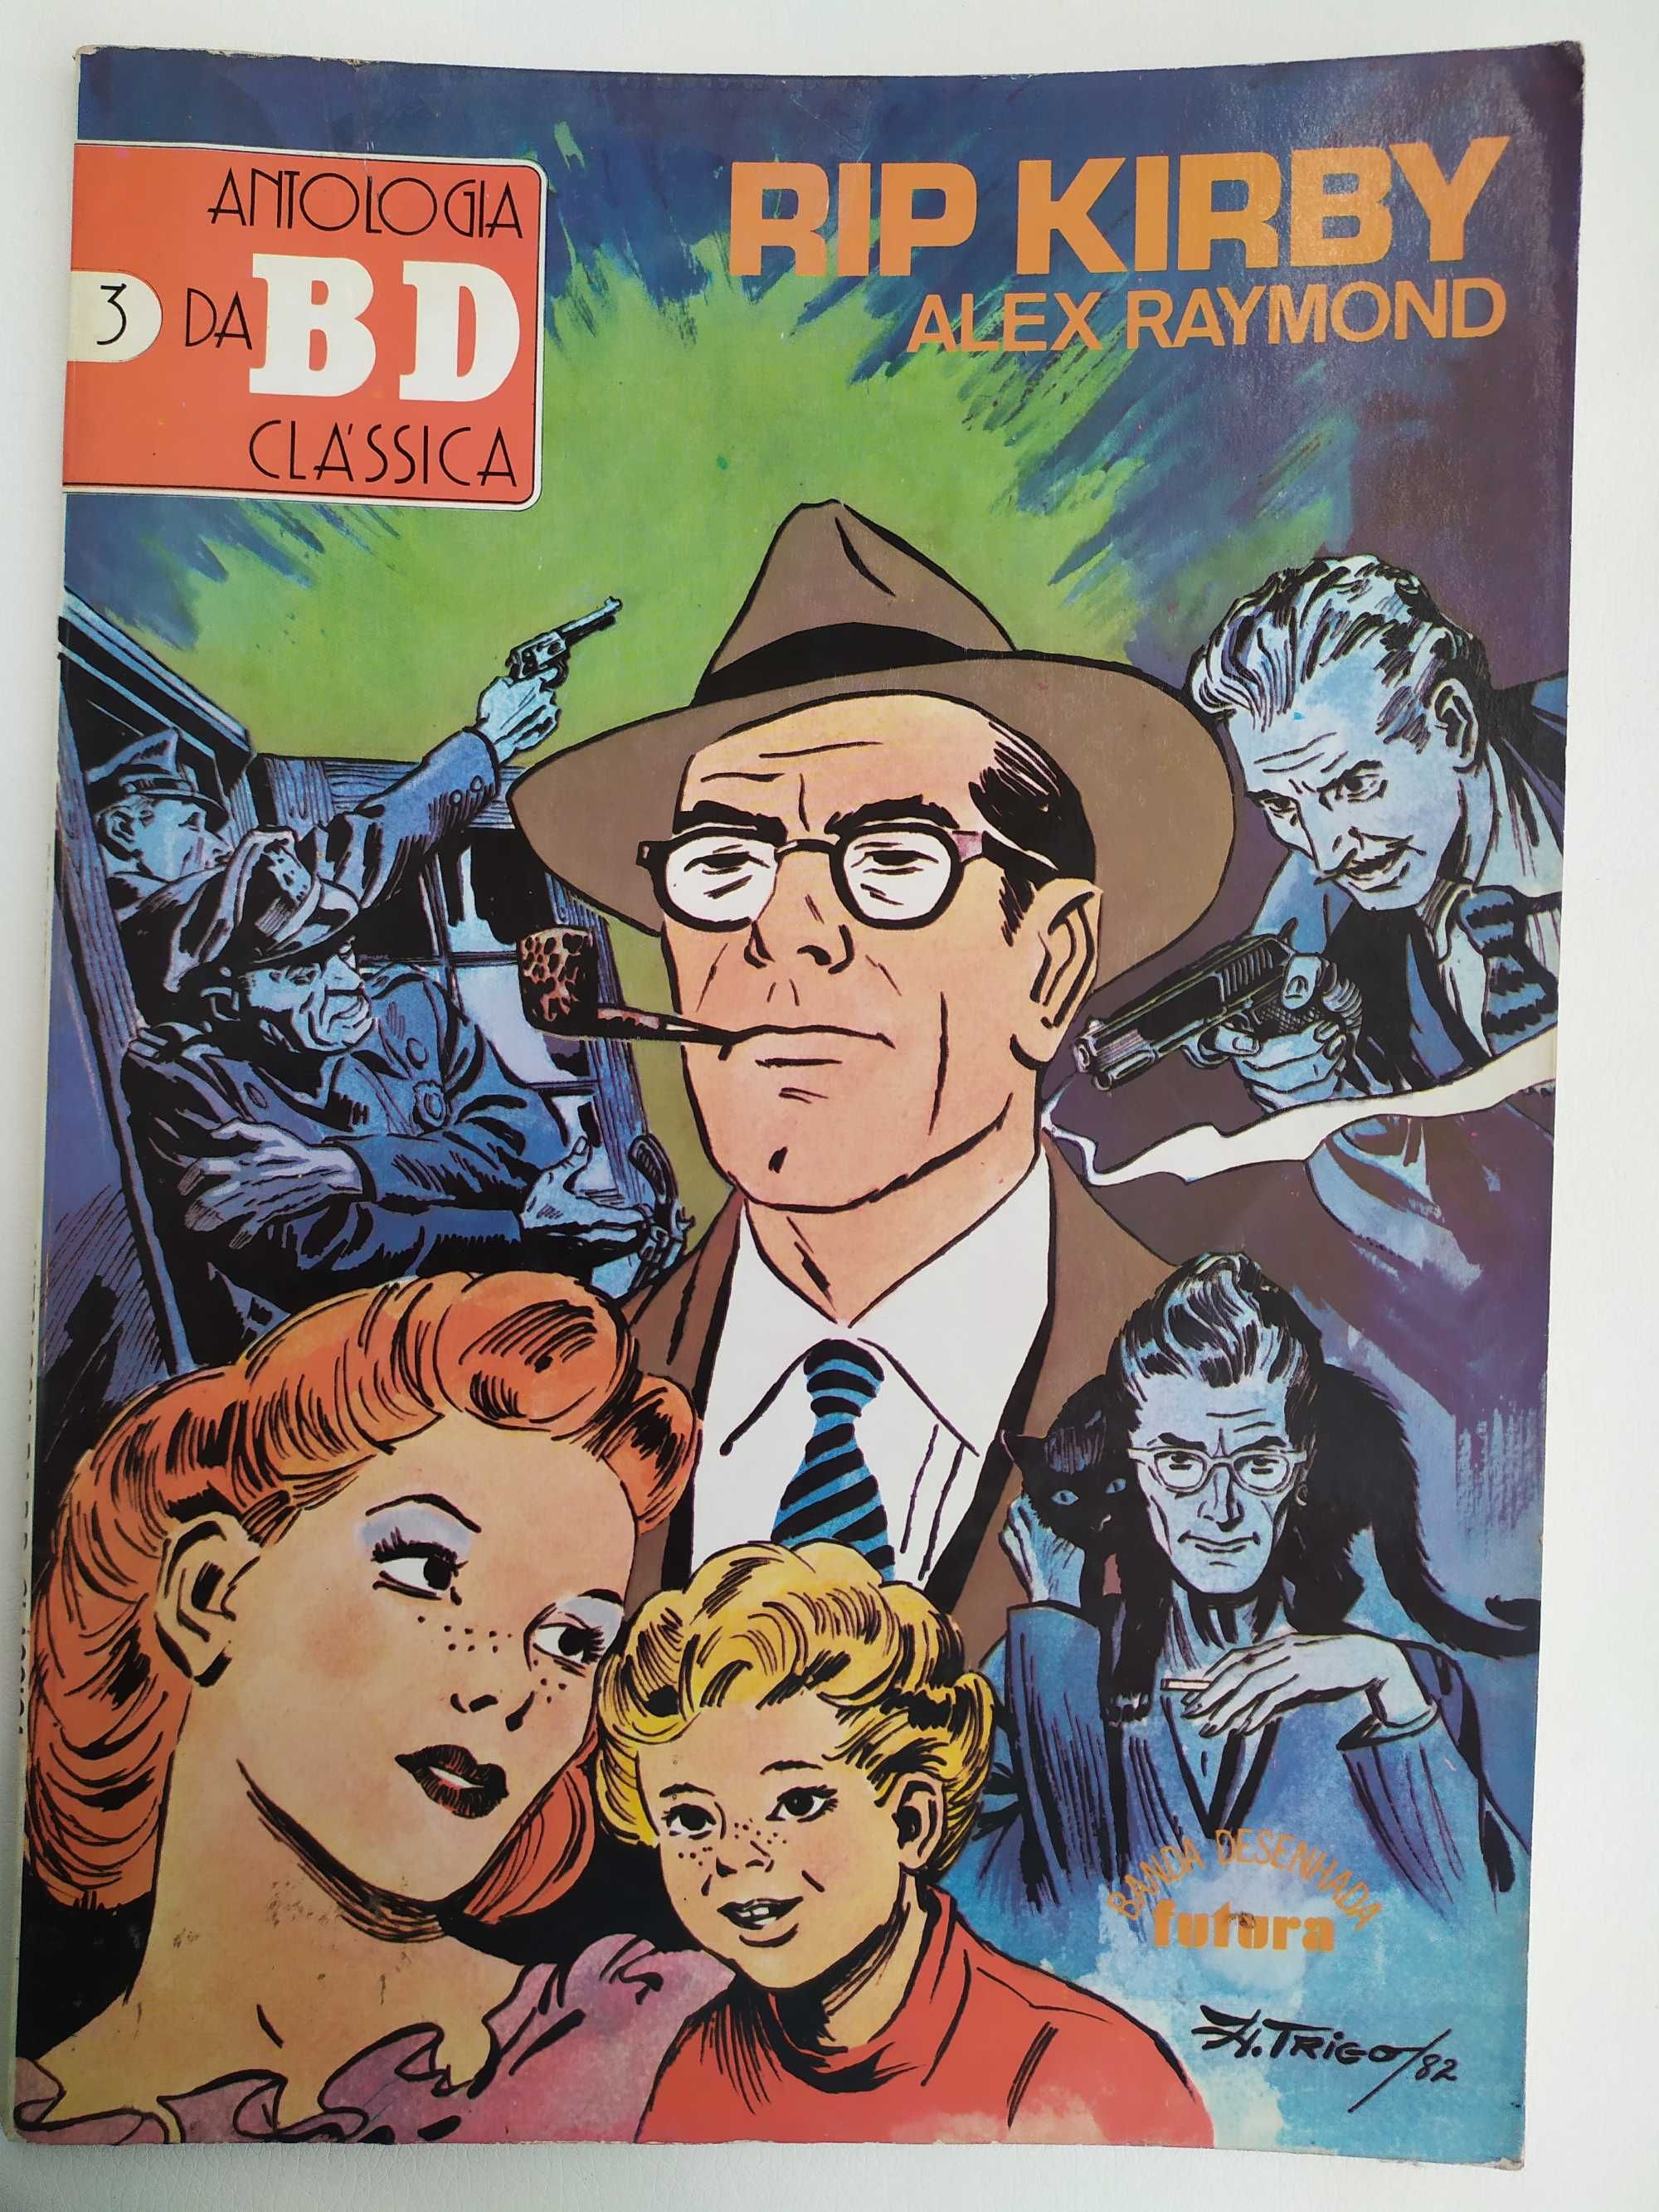 Antologia da BD Clássica nº 3 Rip Kirby – Alex Raymond 1982